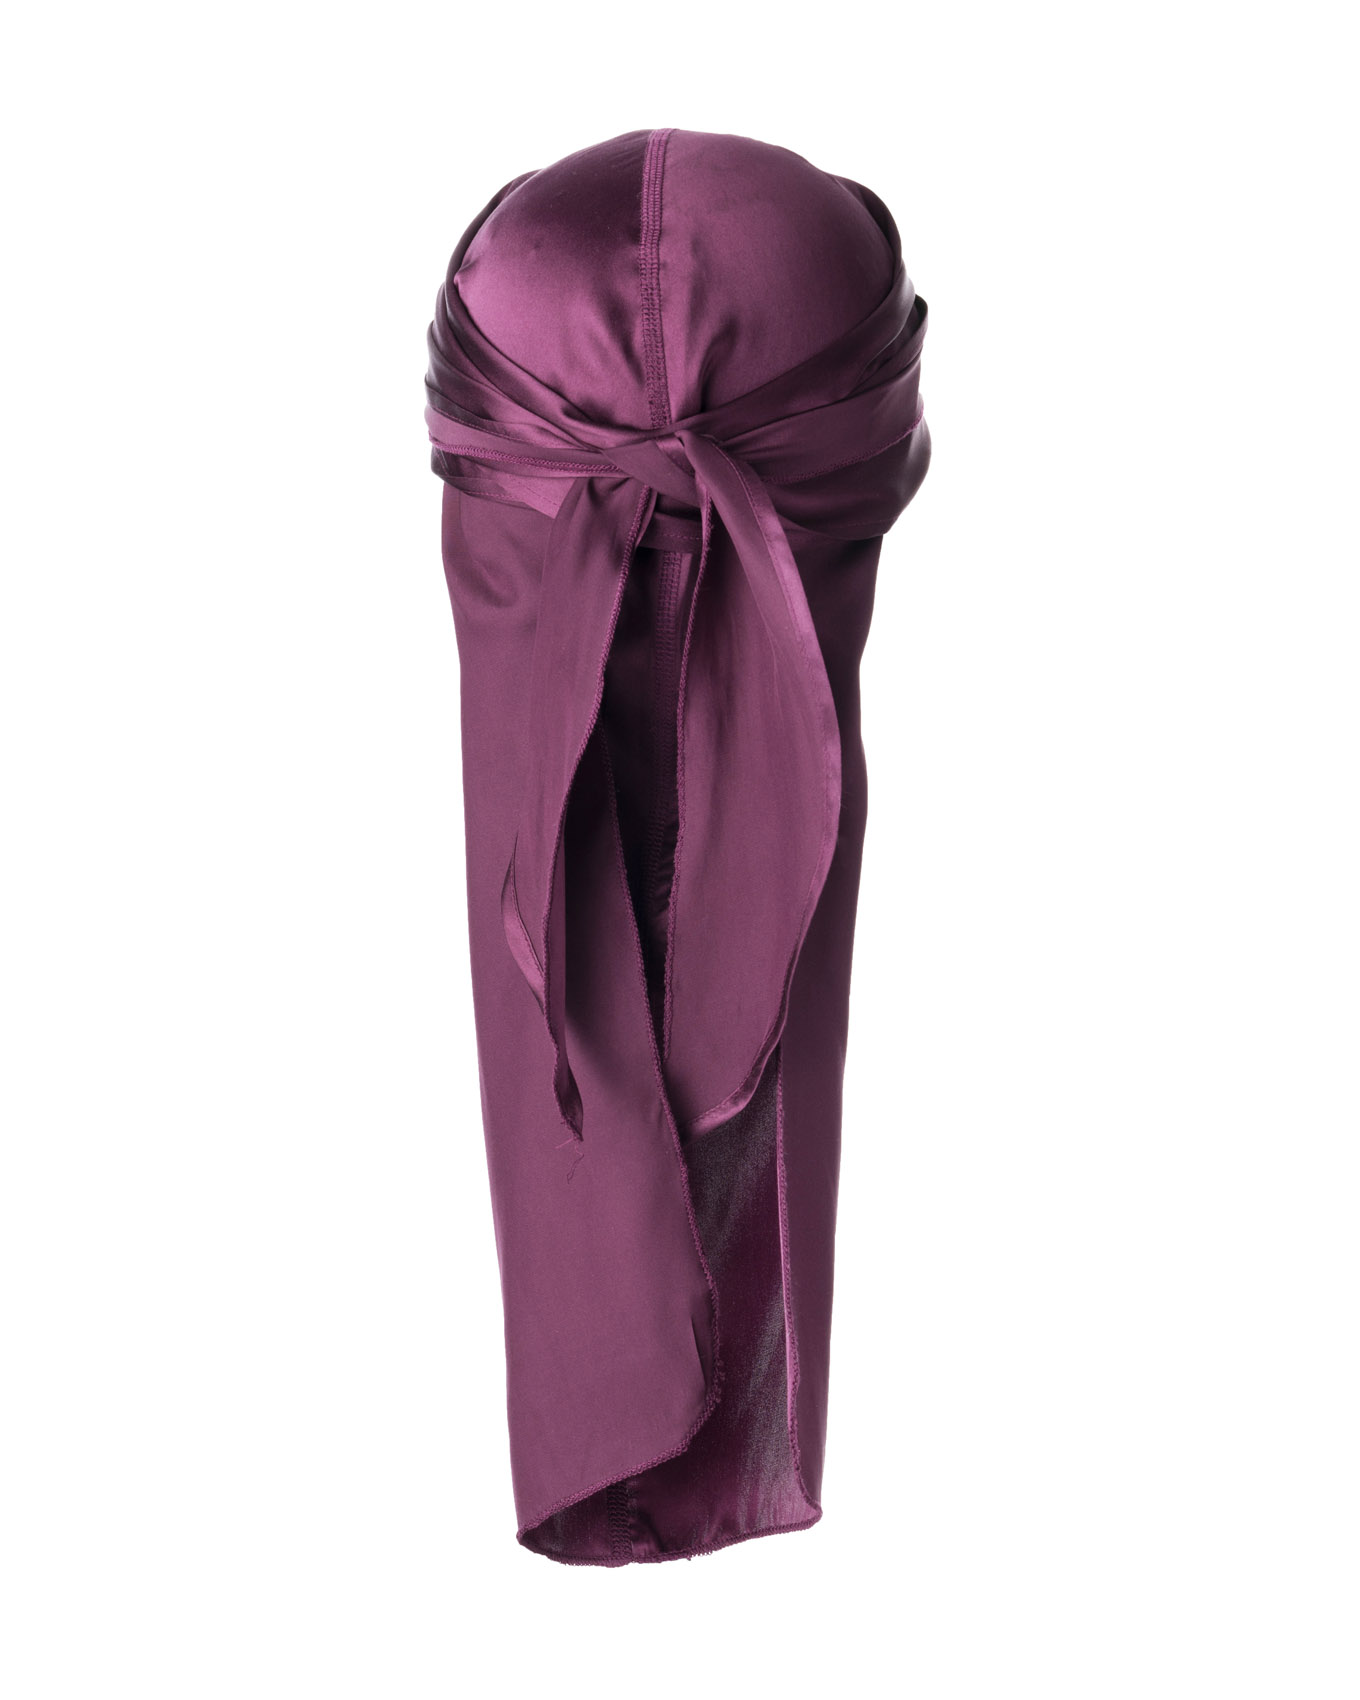 Prince Purple Silk Durag - 100% Authentic Pure Silk Durag (USA made)